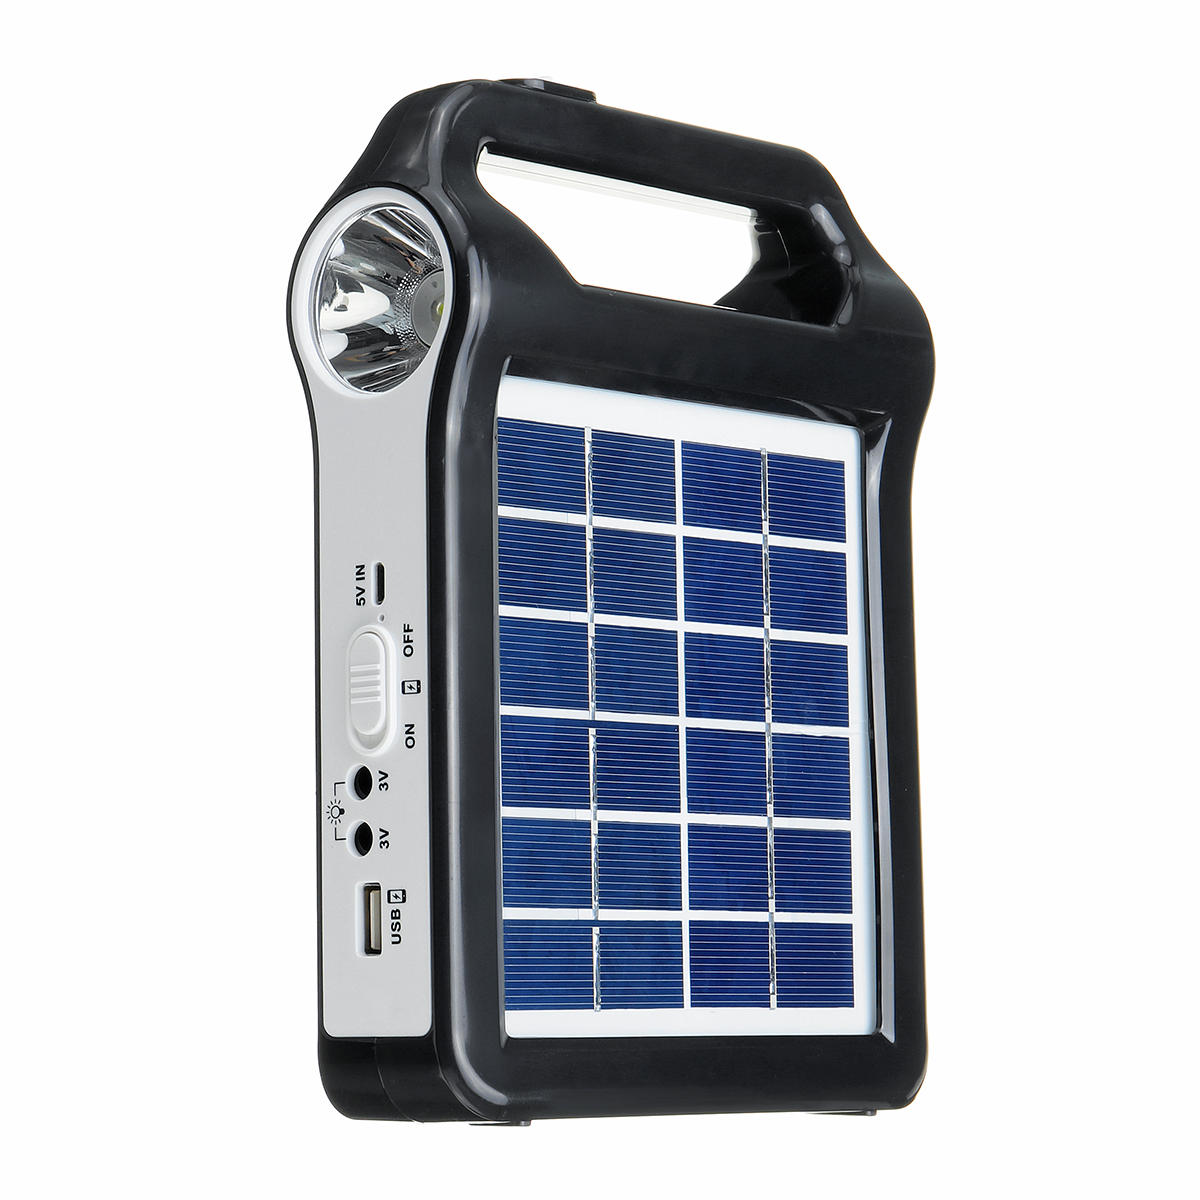 2400mAh Portable Solar Panel Charger Reusable Solar Generator System USB Port With Lamp Lighting